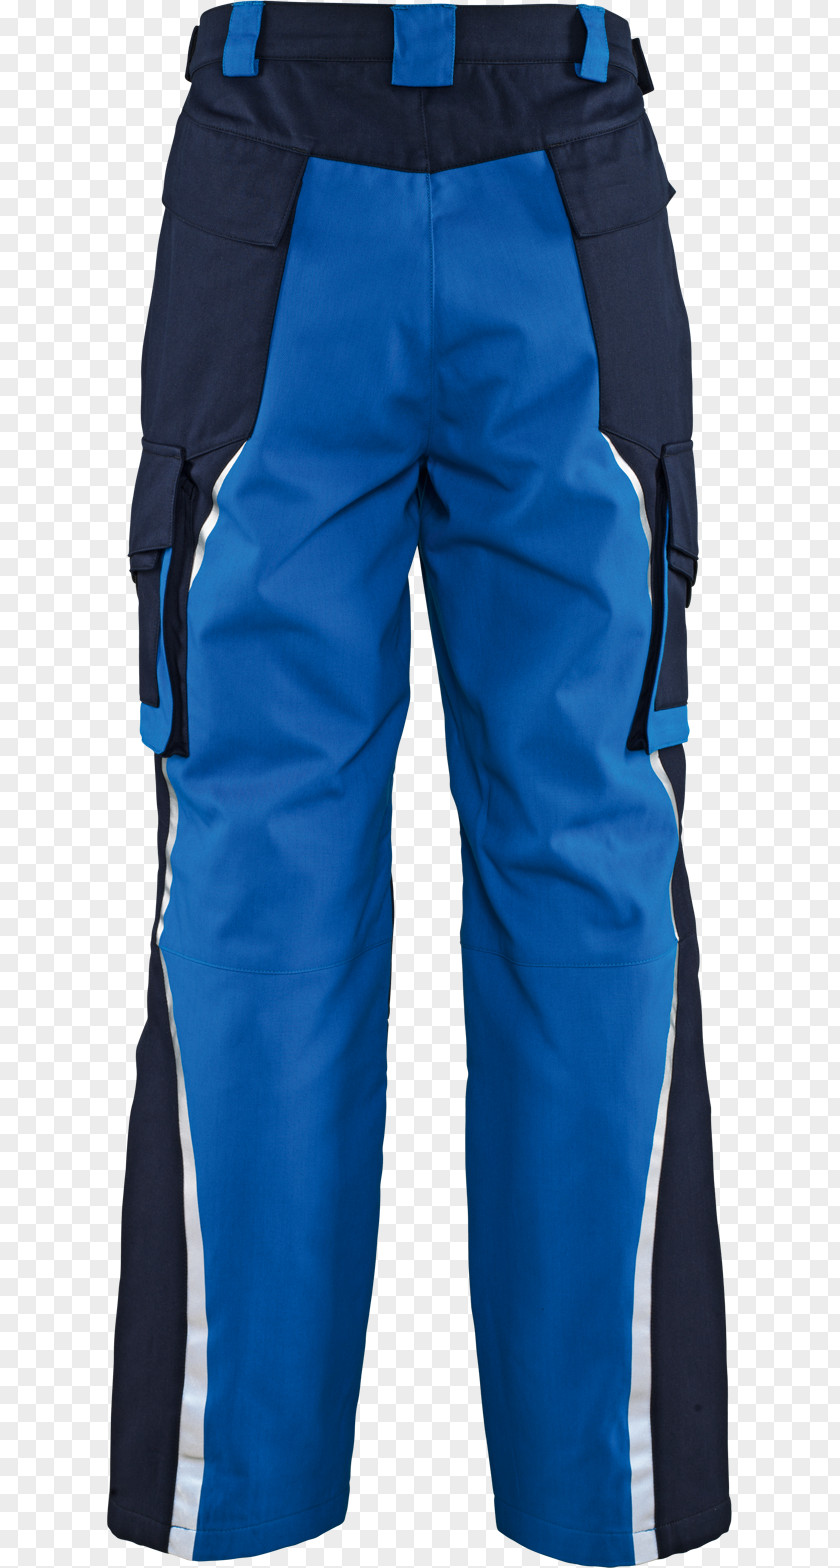 Flash Material Cobalt Blue Pants PNG